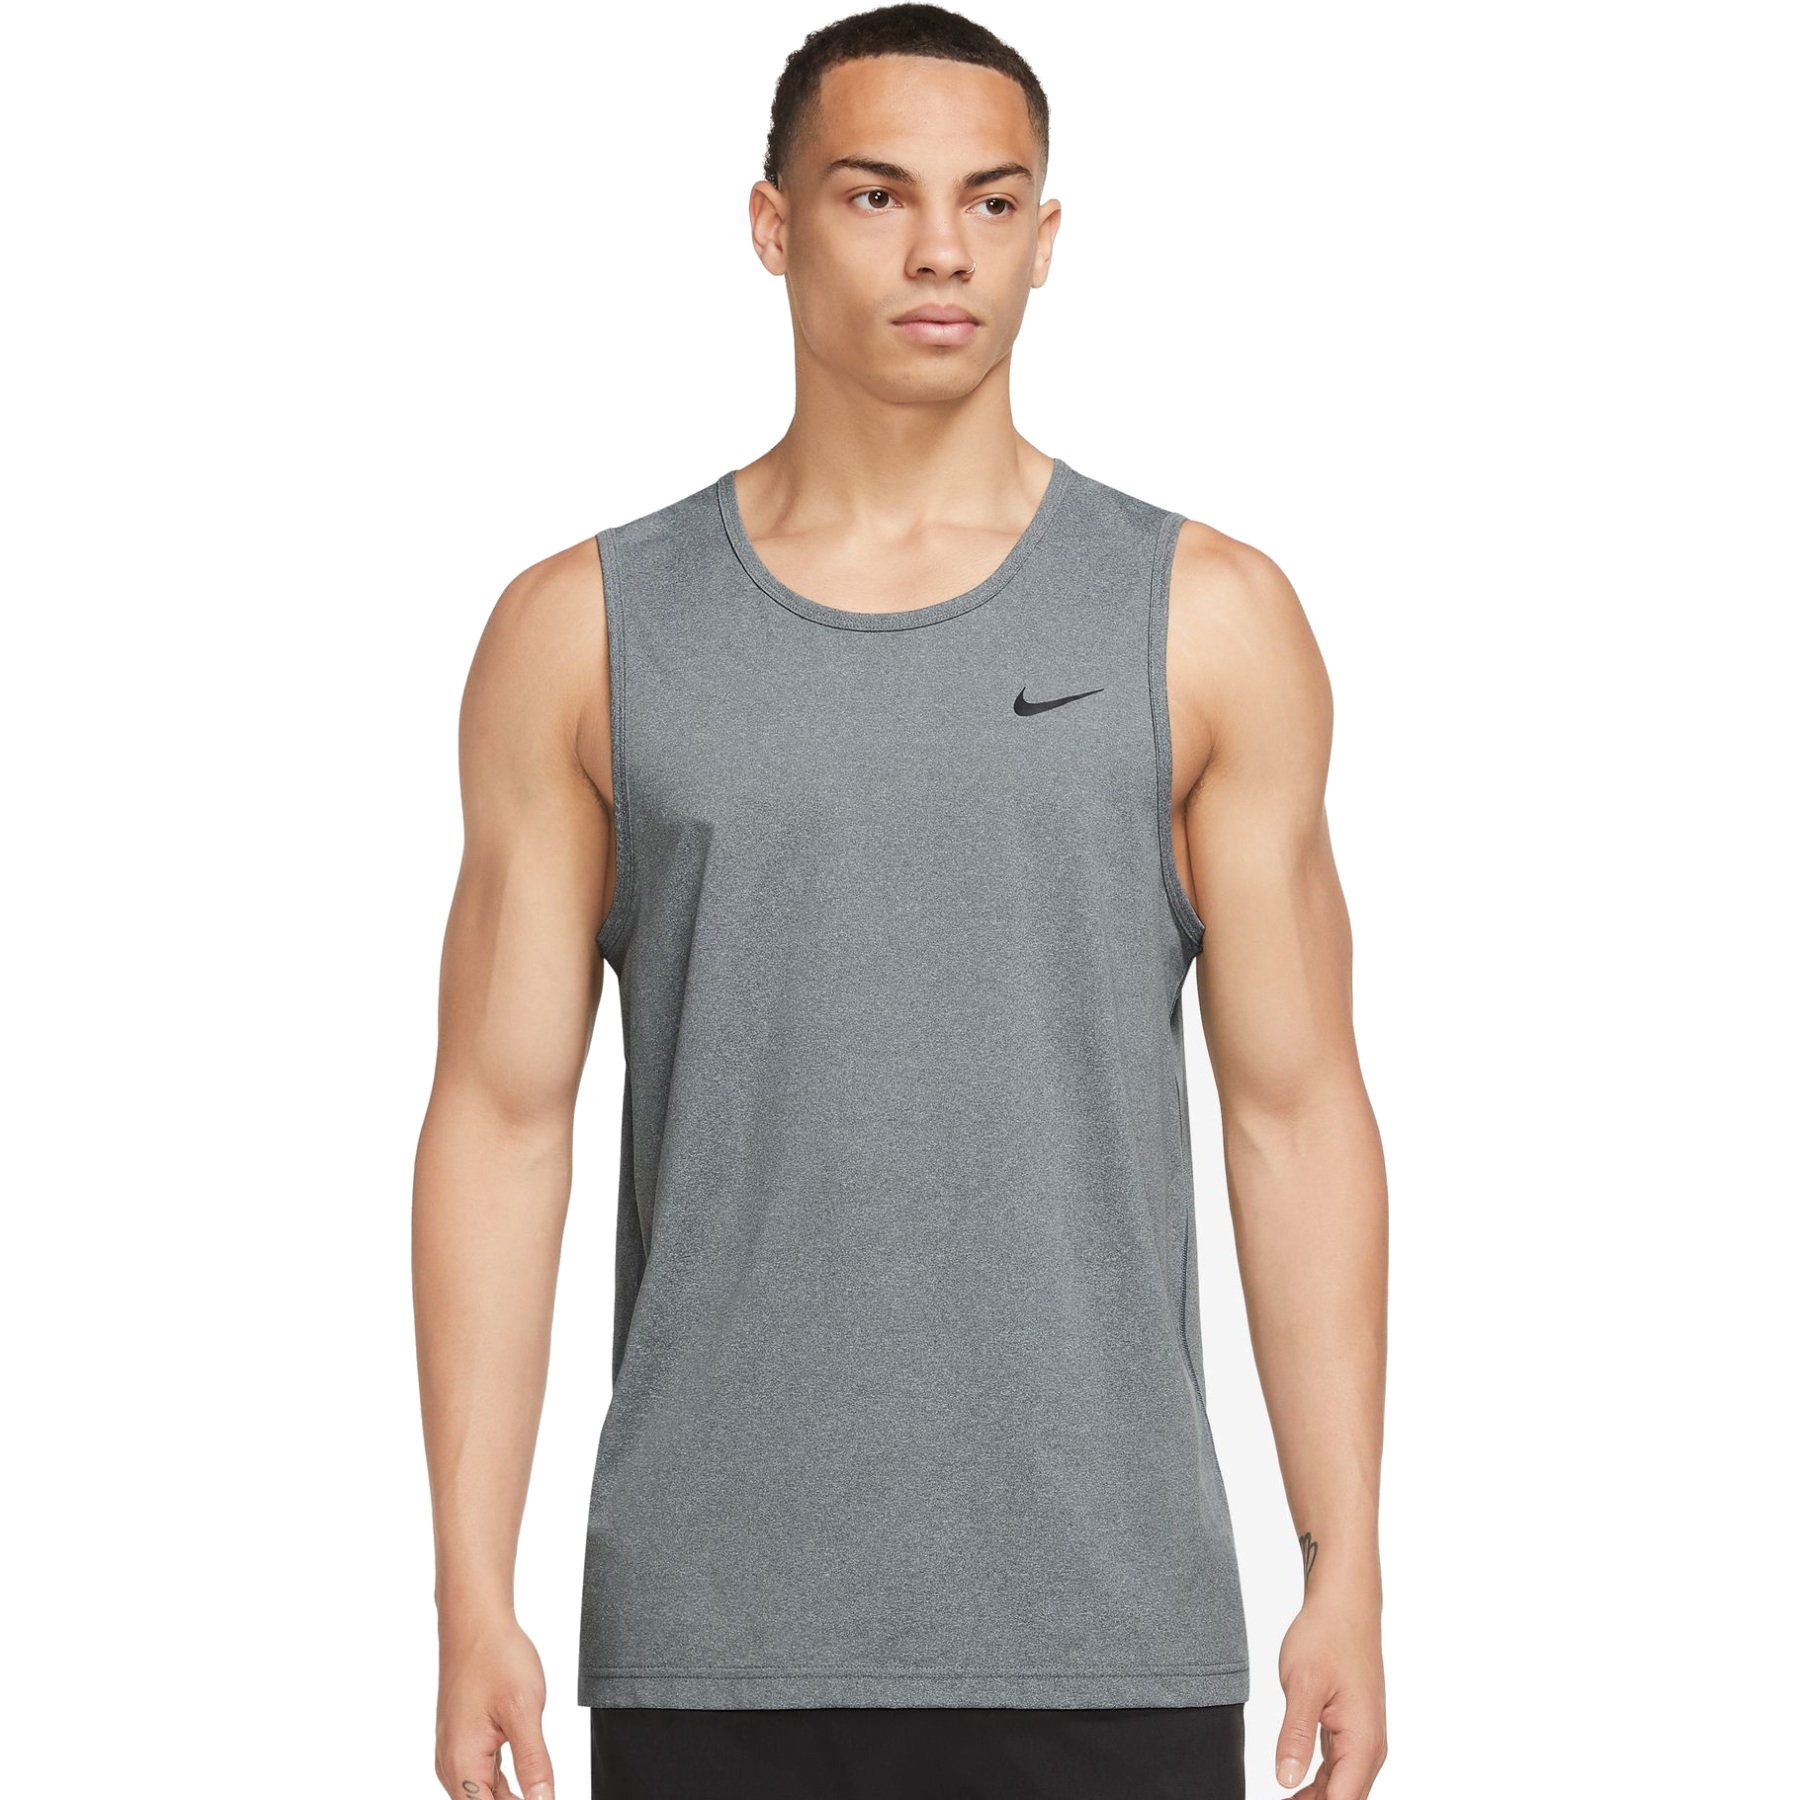 Produktbild von Nike Dri-FIT Hyverse Herren Fitness-Shirt - smoke grey/htr/black DV9841-097